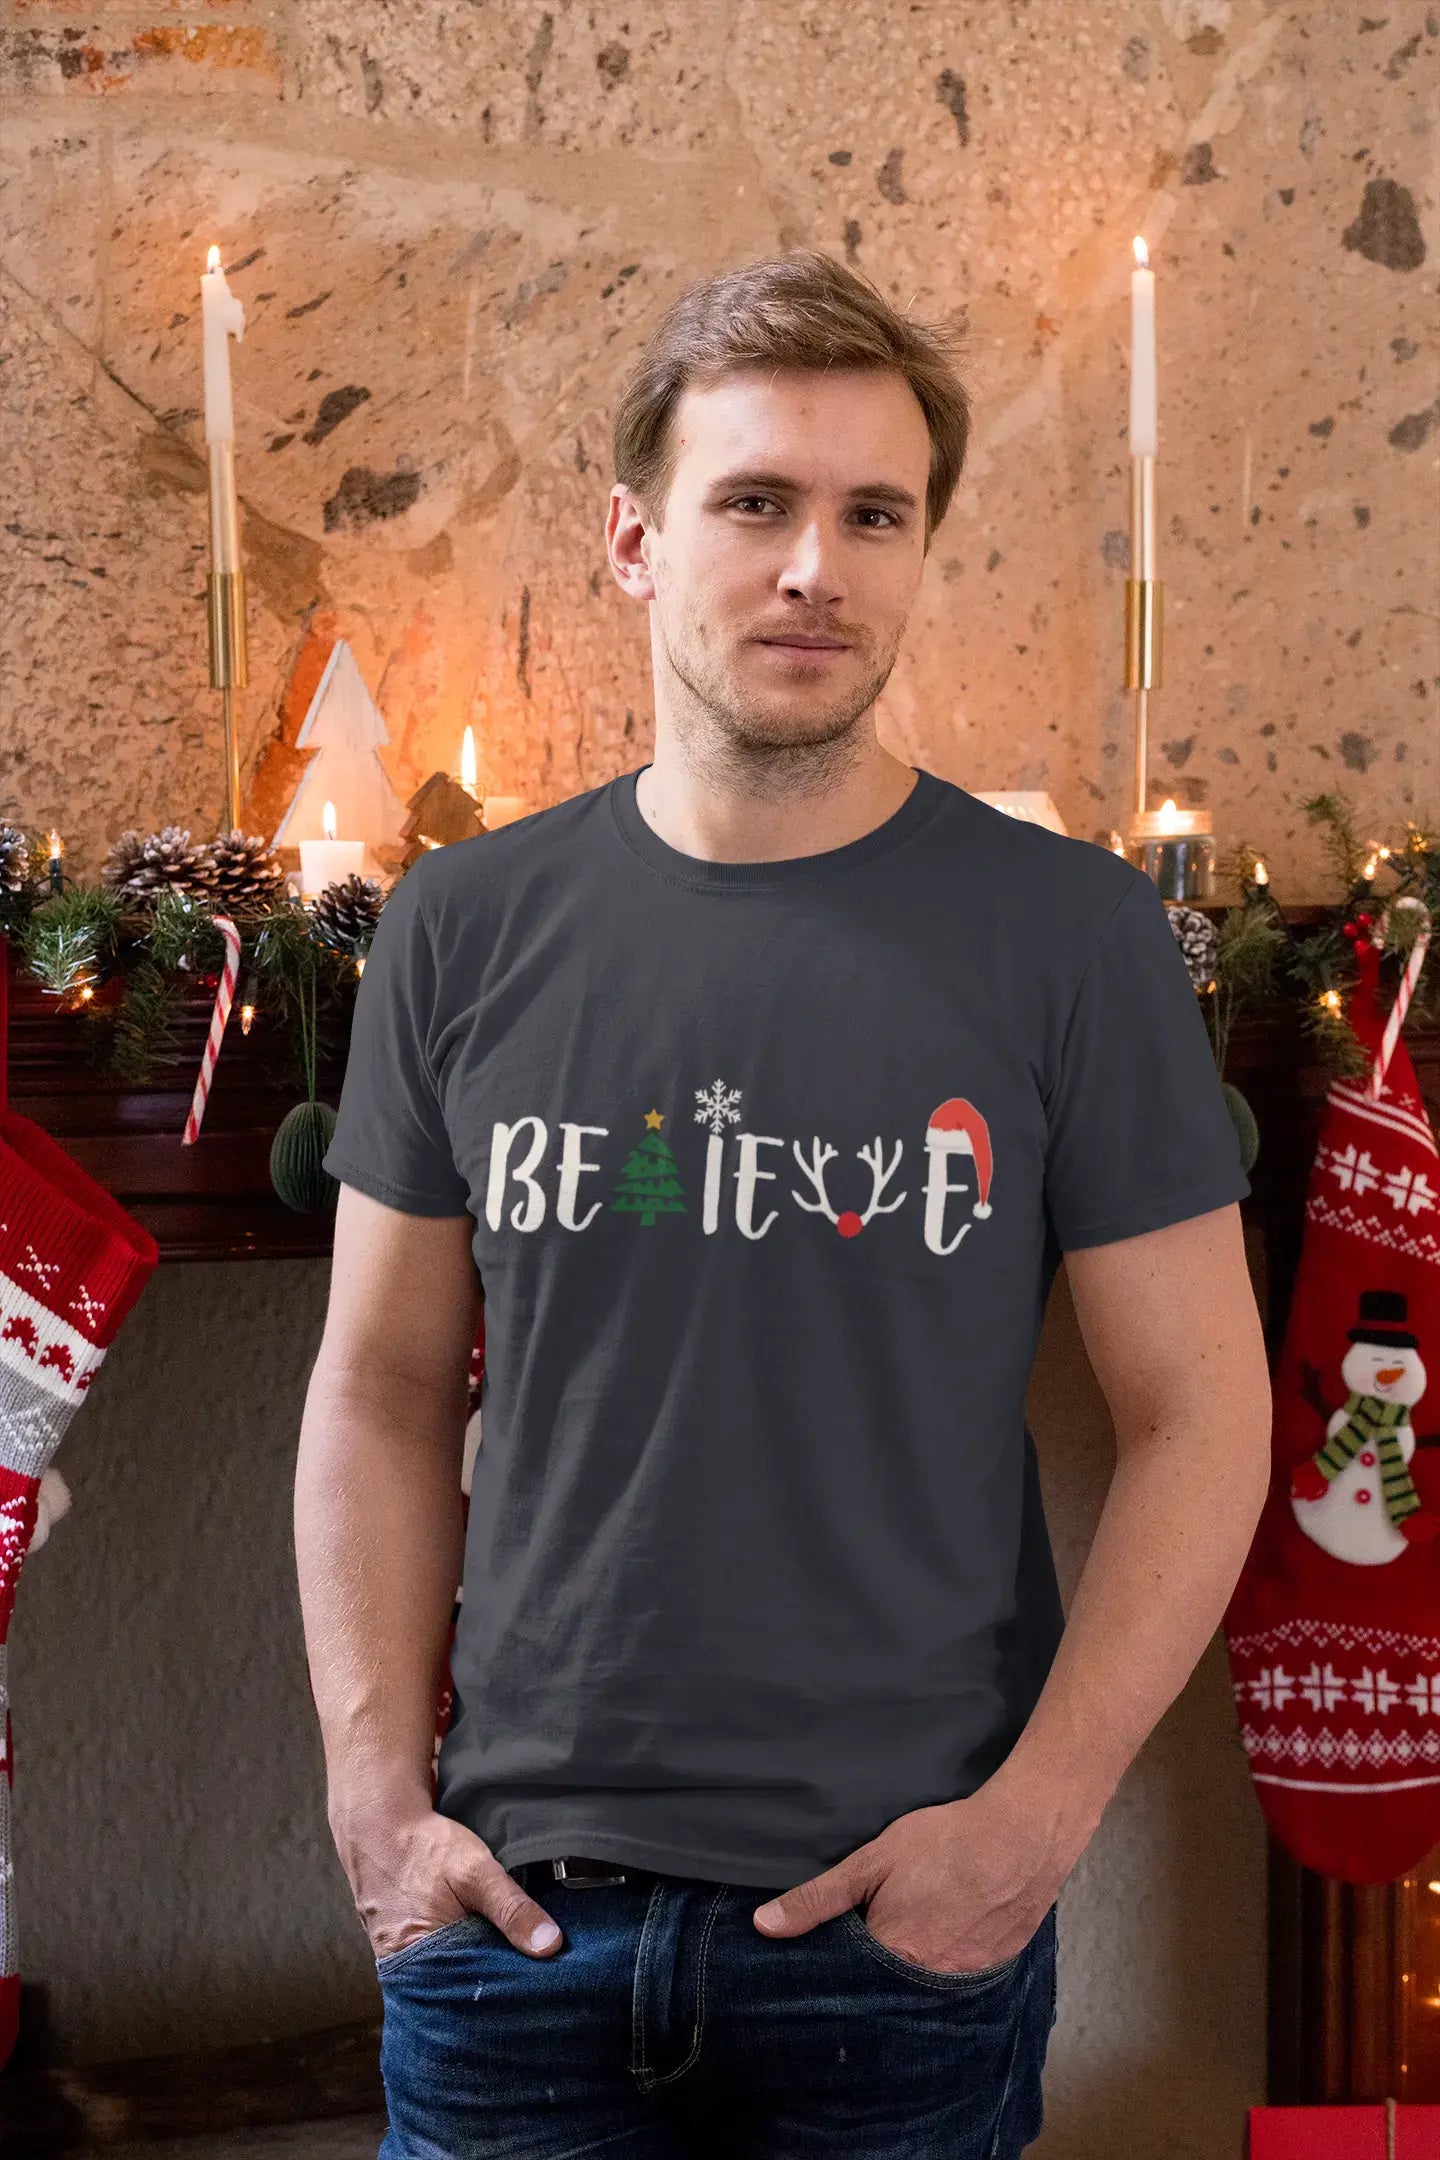 ULTRABASIC - Graphic Men's Christmas Believe Tree T-Shirt Xmas Gift Ideas Vintage White